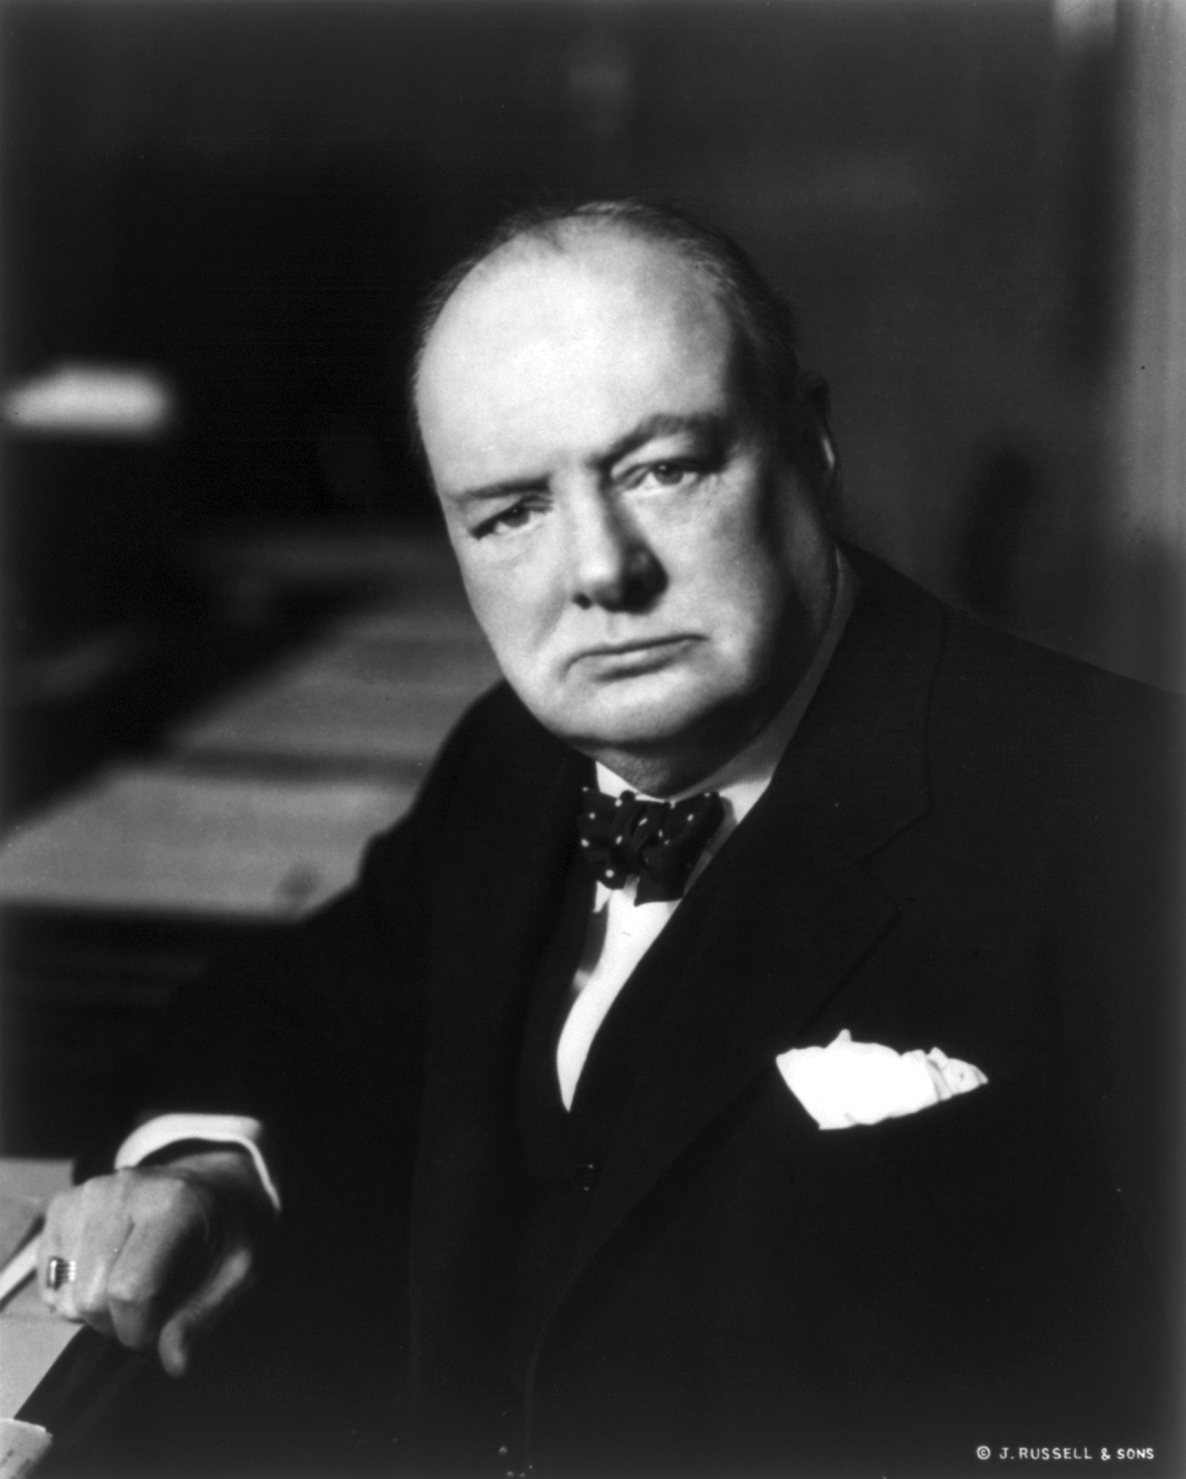 https://upload.wikimedia.org/wikipedia/commons/d/d0/Winston_Churchill_cph.3b12010.jpg